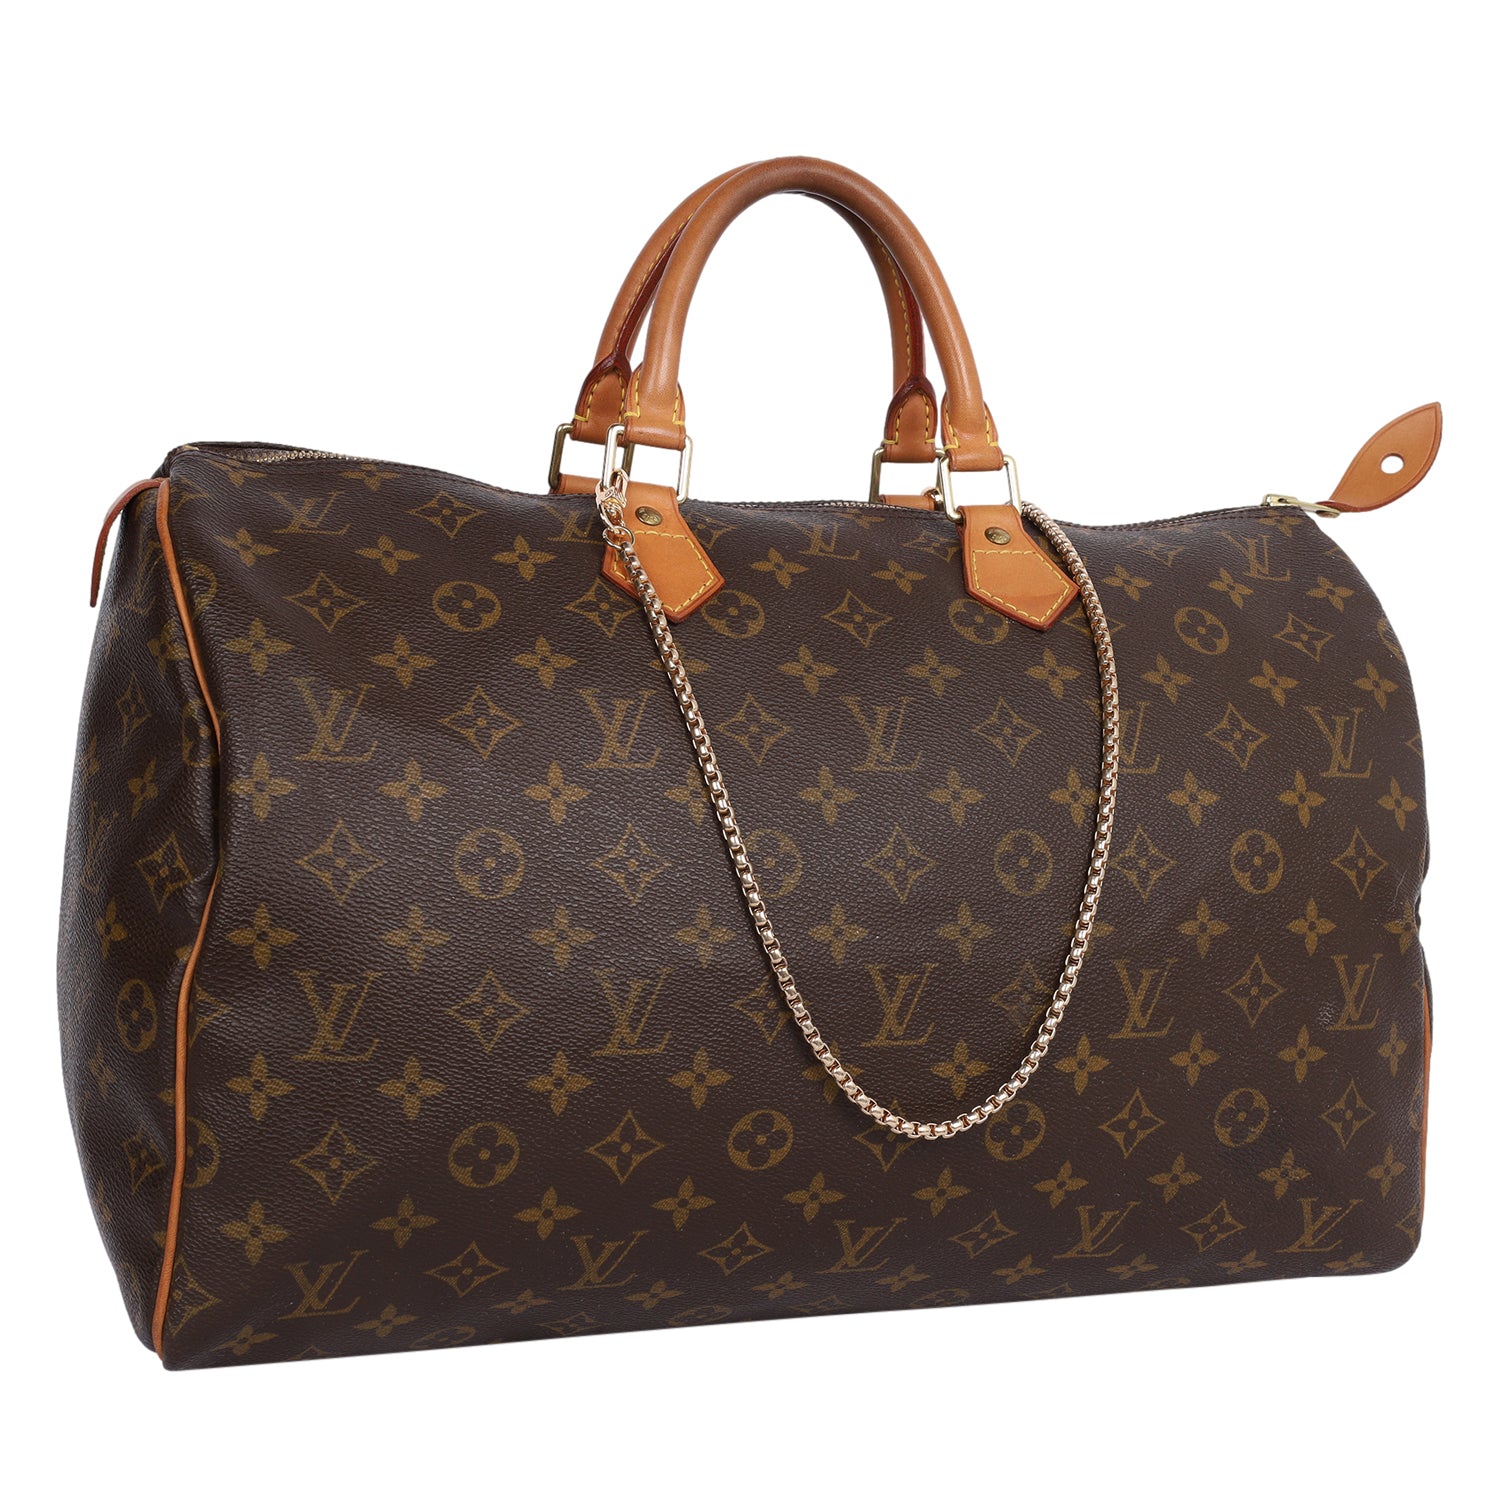 Pre-Loved Vintage Authentic Louis Vuitton speedy 40 travel bag